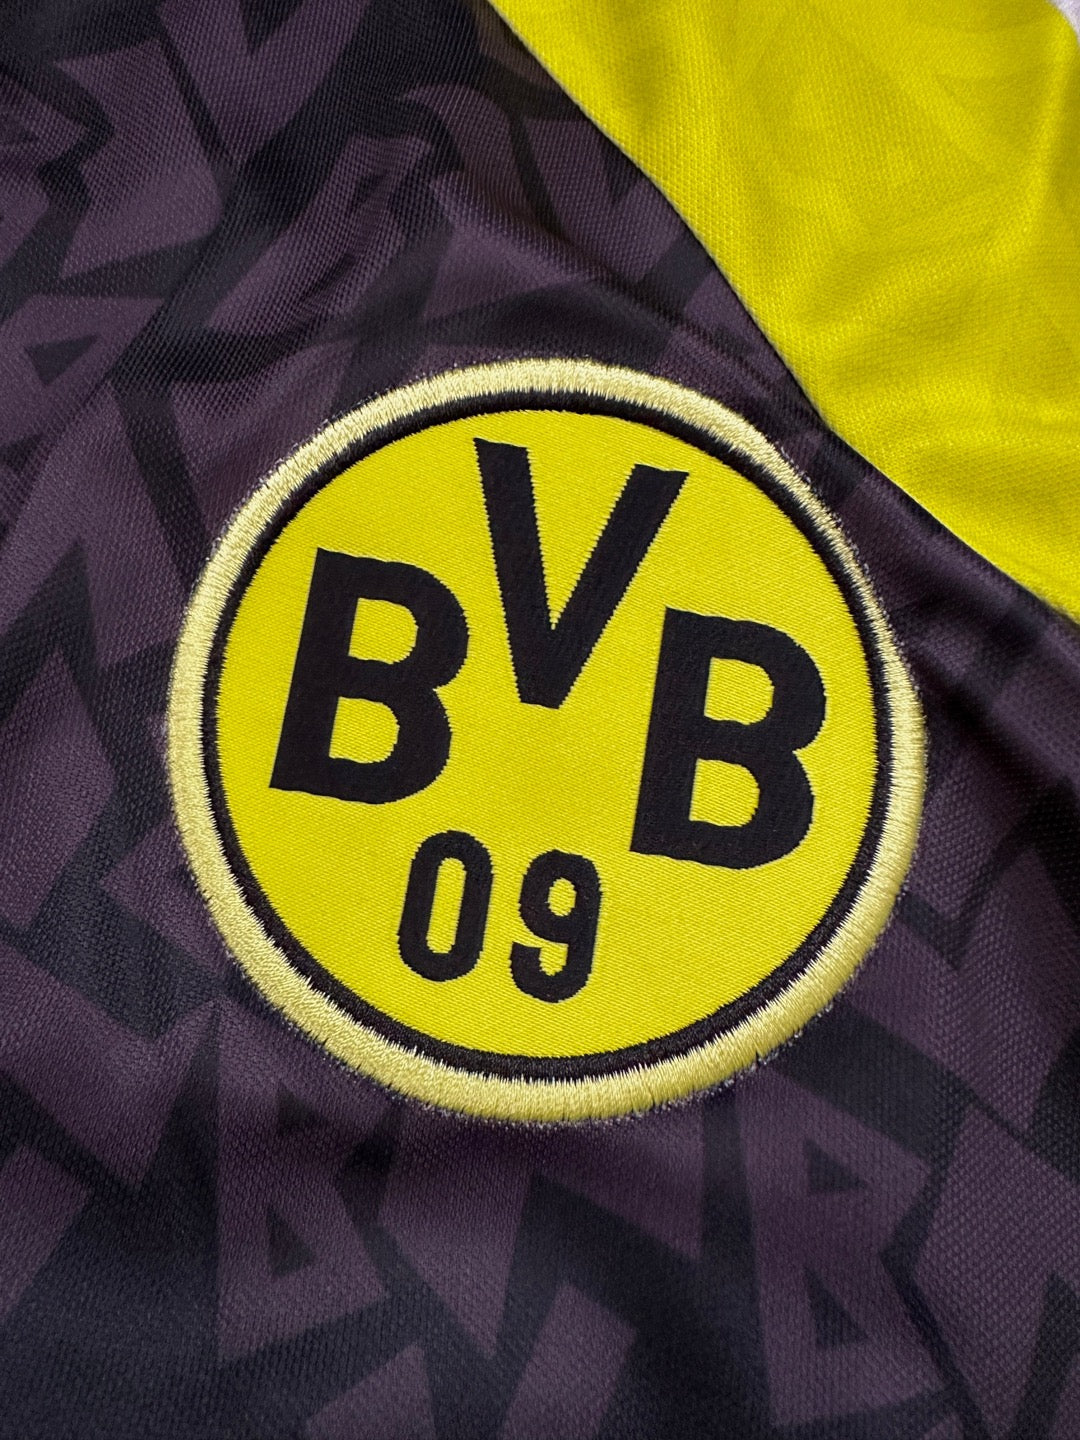 Jersey Retro Borussia Dortmund 1995 1996 Visitante Manga larga escudo